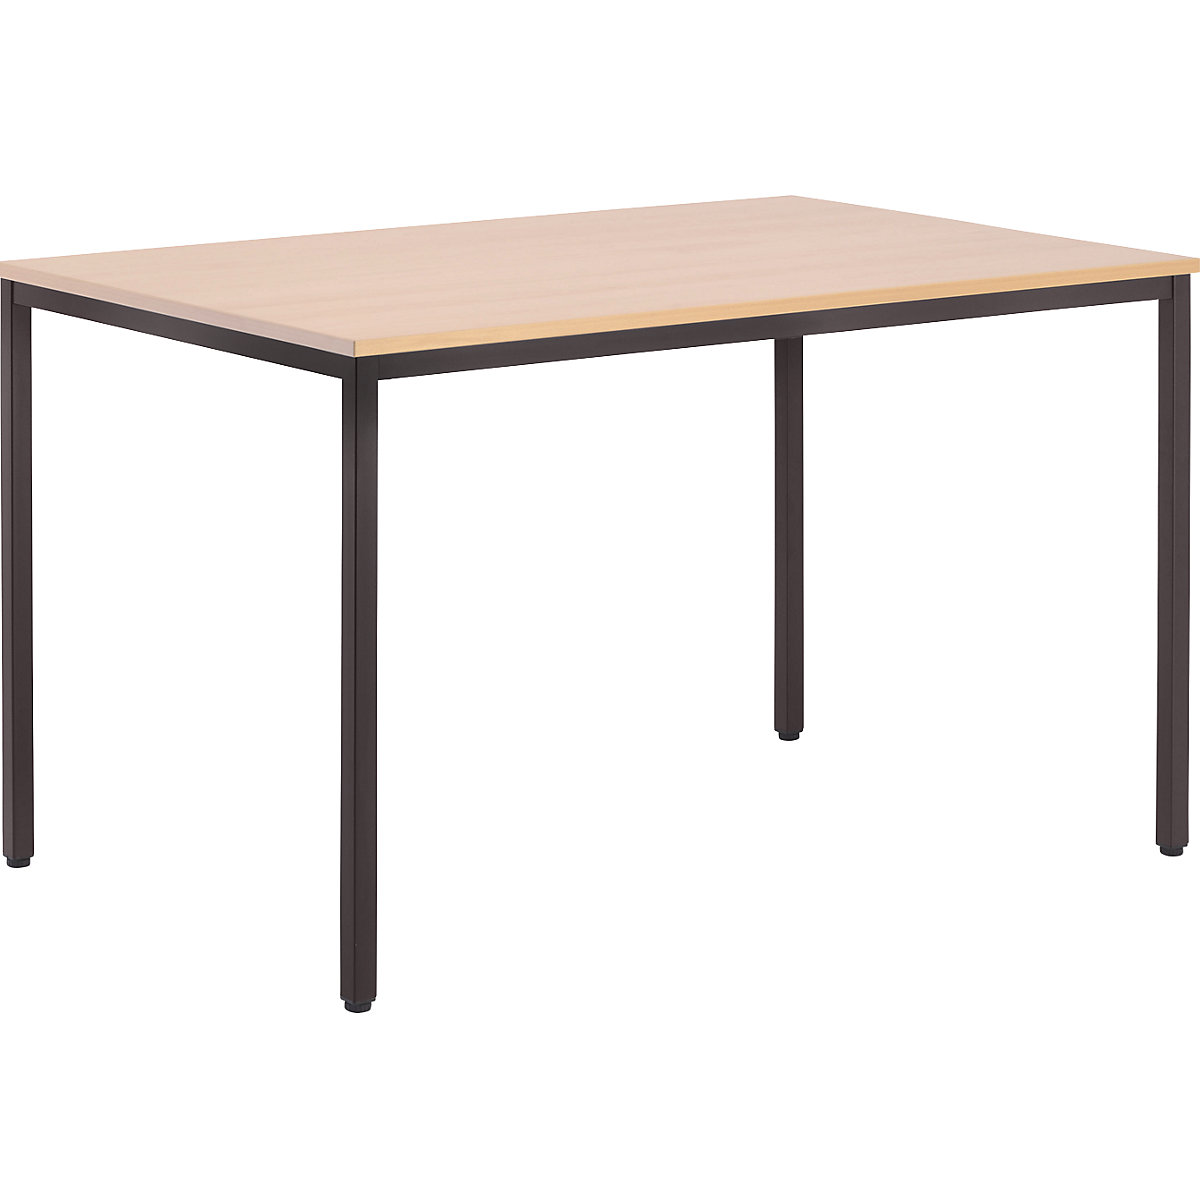 Multi-purpose table – eurokraft basic, HxWxD 720 x 1200 x 800 mm, top in beech finish, grey brown frame-4